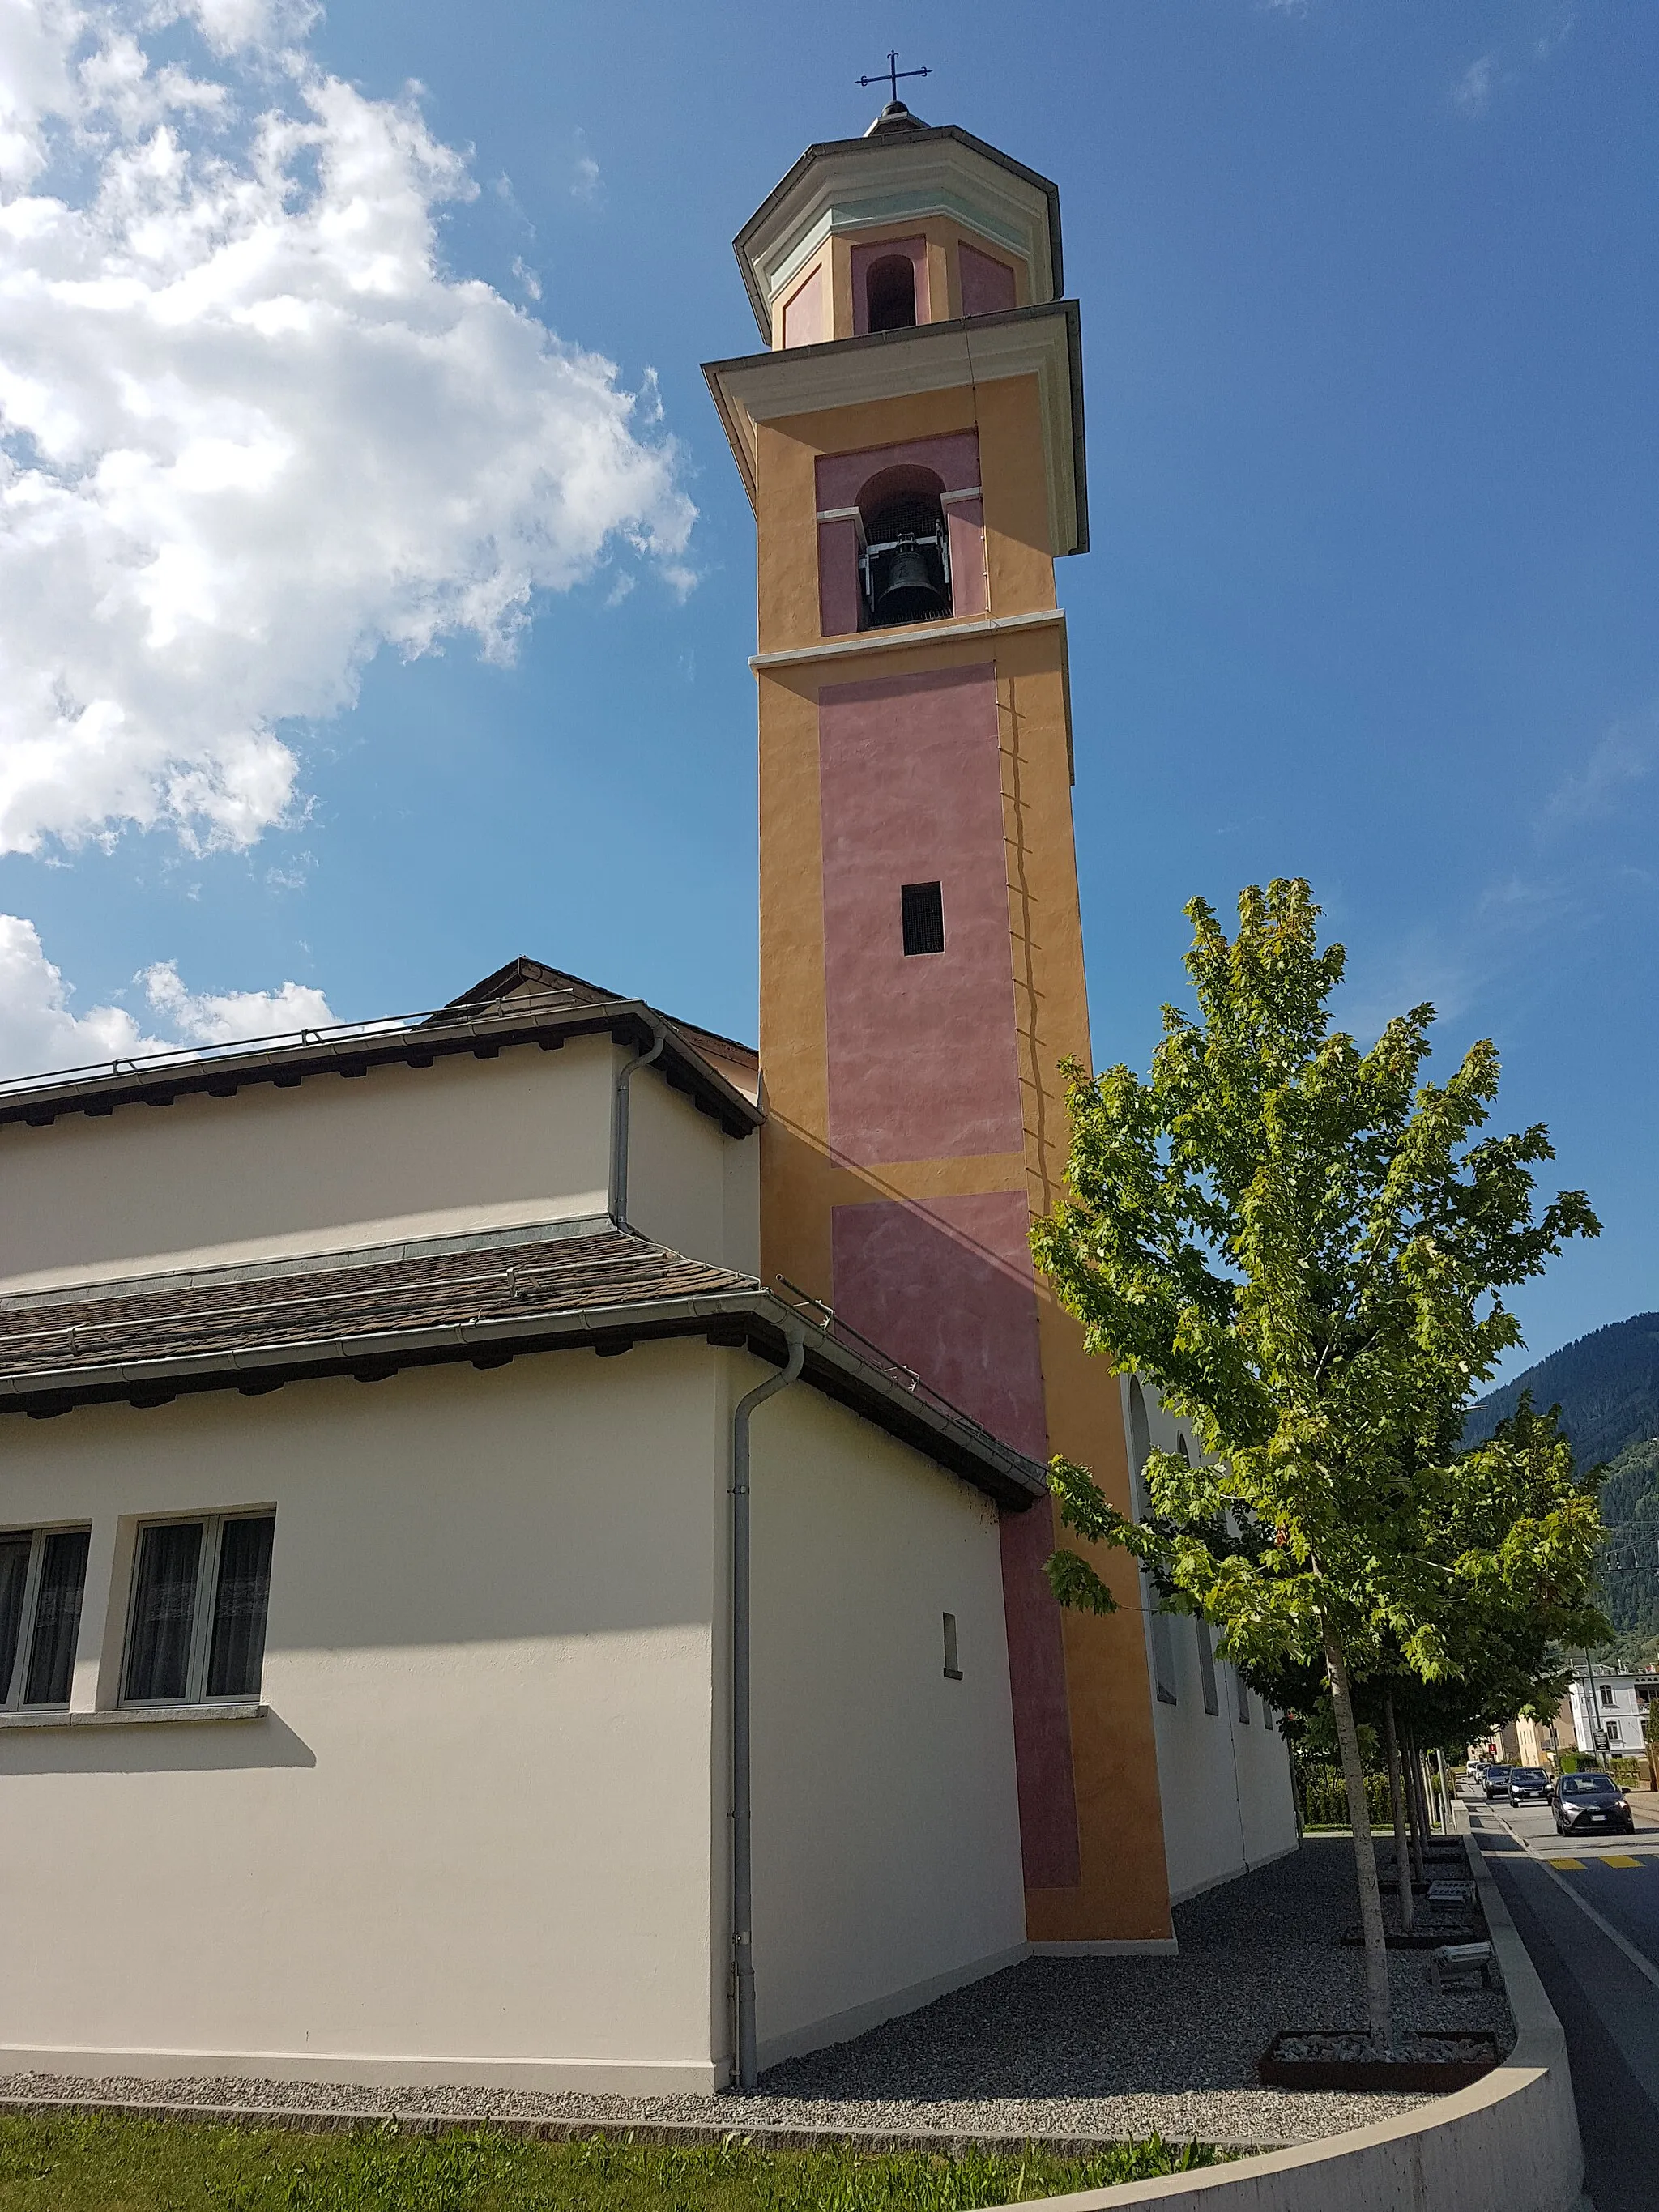 Photo showing: Le Prese in Valposchiavo, Grisons, Switzerland. Catholic Church of San Francesco d'Assisi.